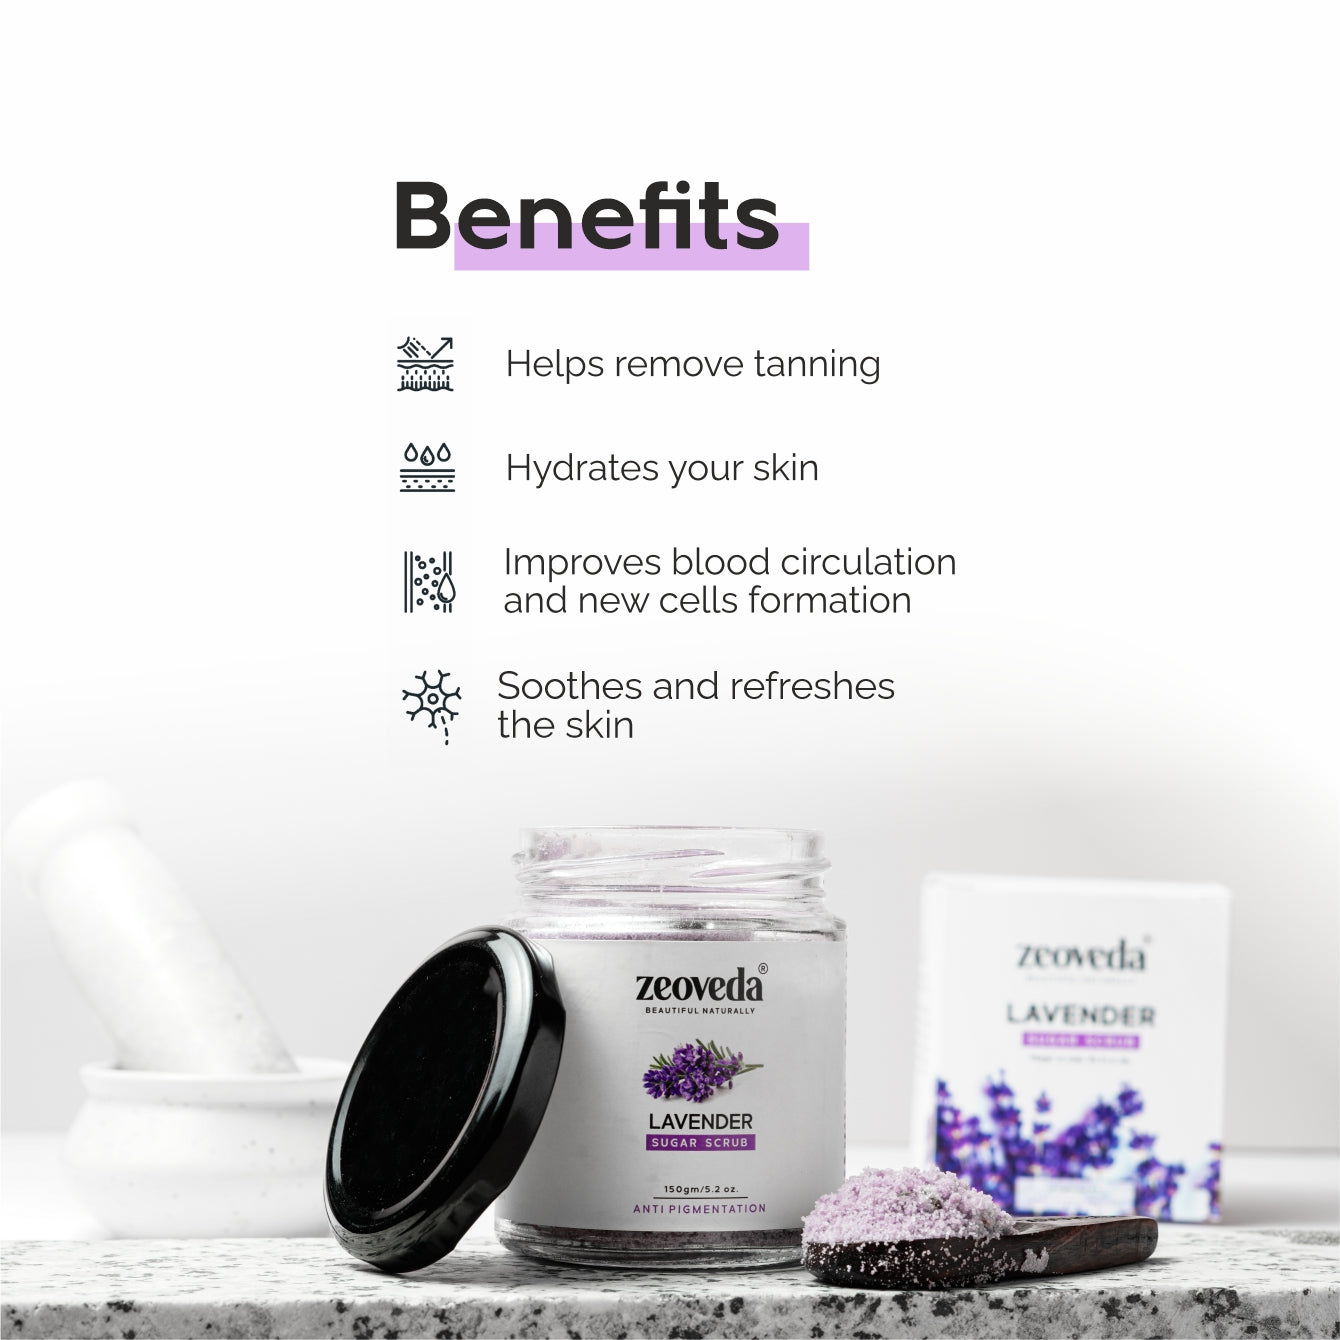 Lavender Sugar Scrub(150GM) + Vitamin C Face Wash(100ML) Combo For Skin Brightening & Spot Free Skin